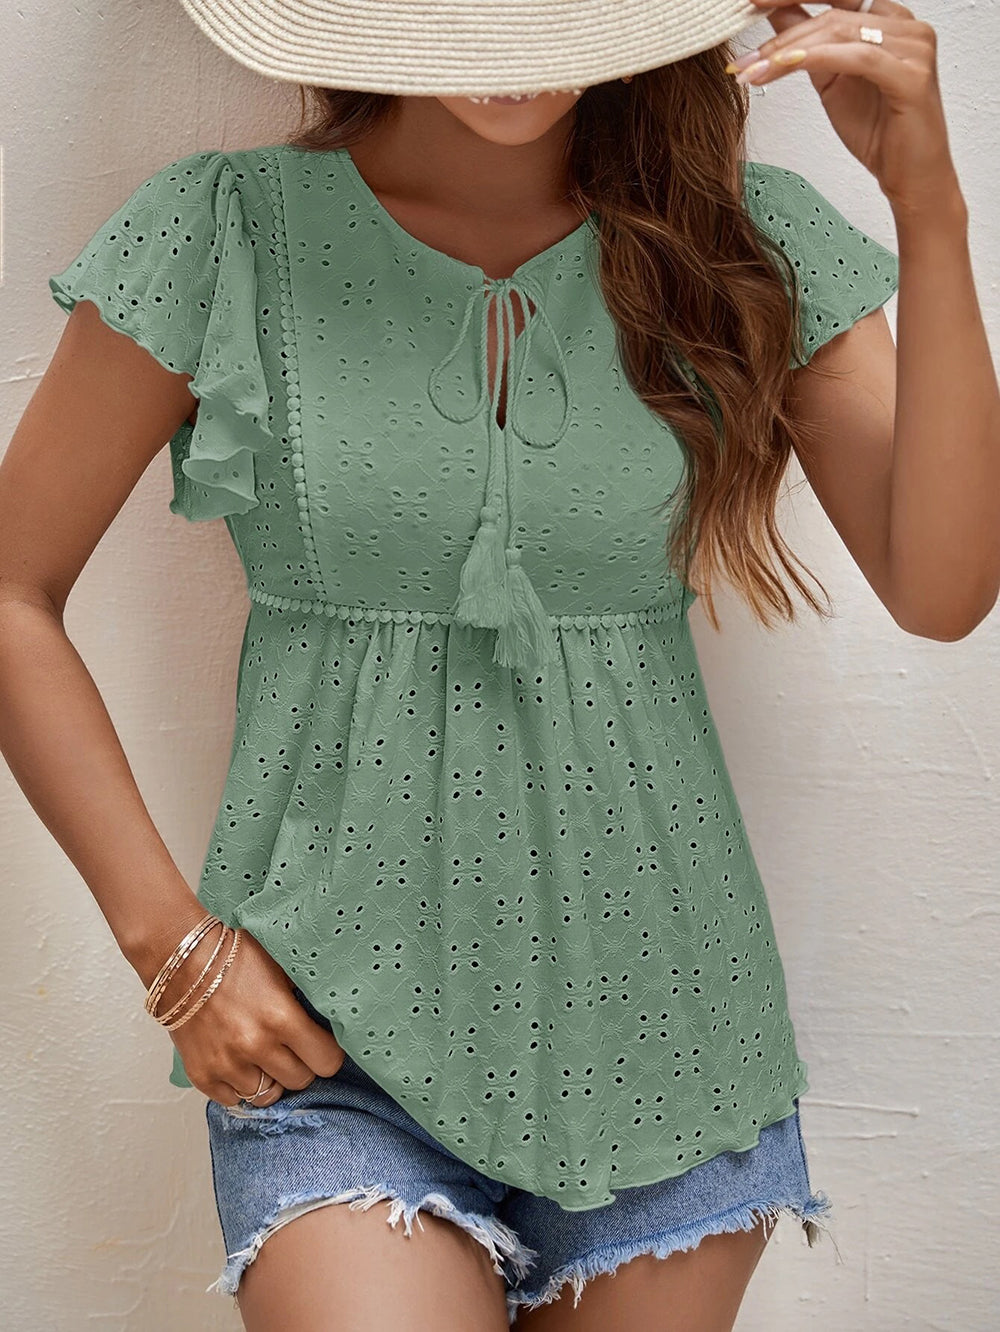 Women Clothing Spring Summer Women Solid Color Jacquard Ruffle Sleeve Elegant T Shirt Top